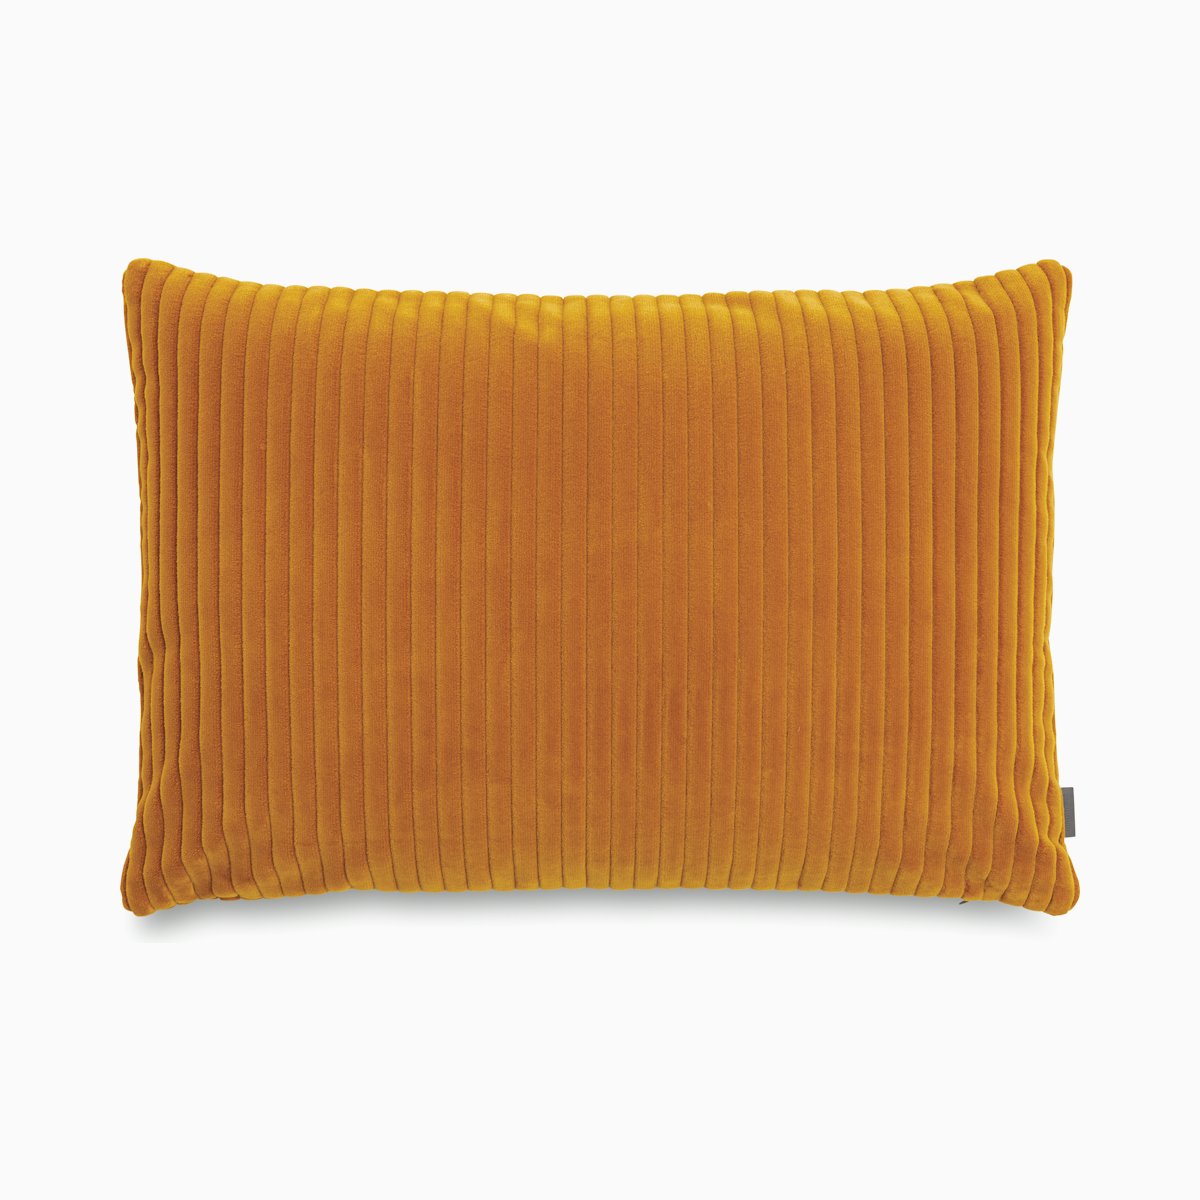 Wide Corduroy Rectangular Throw Pillow